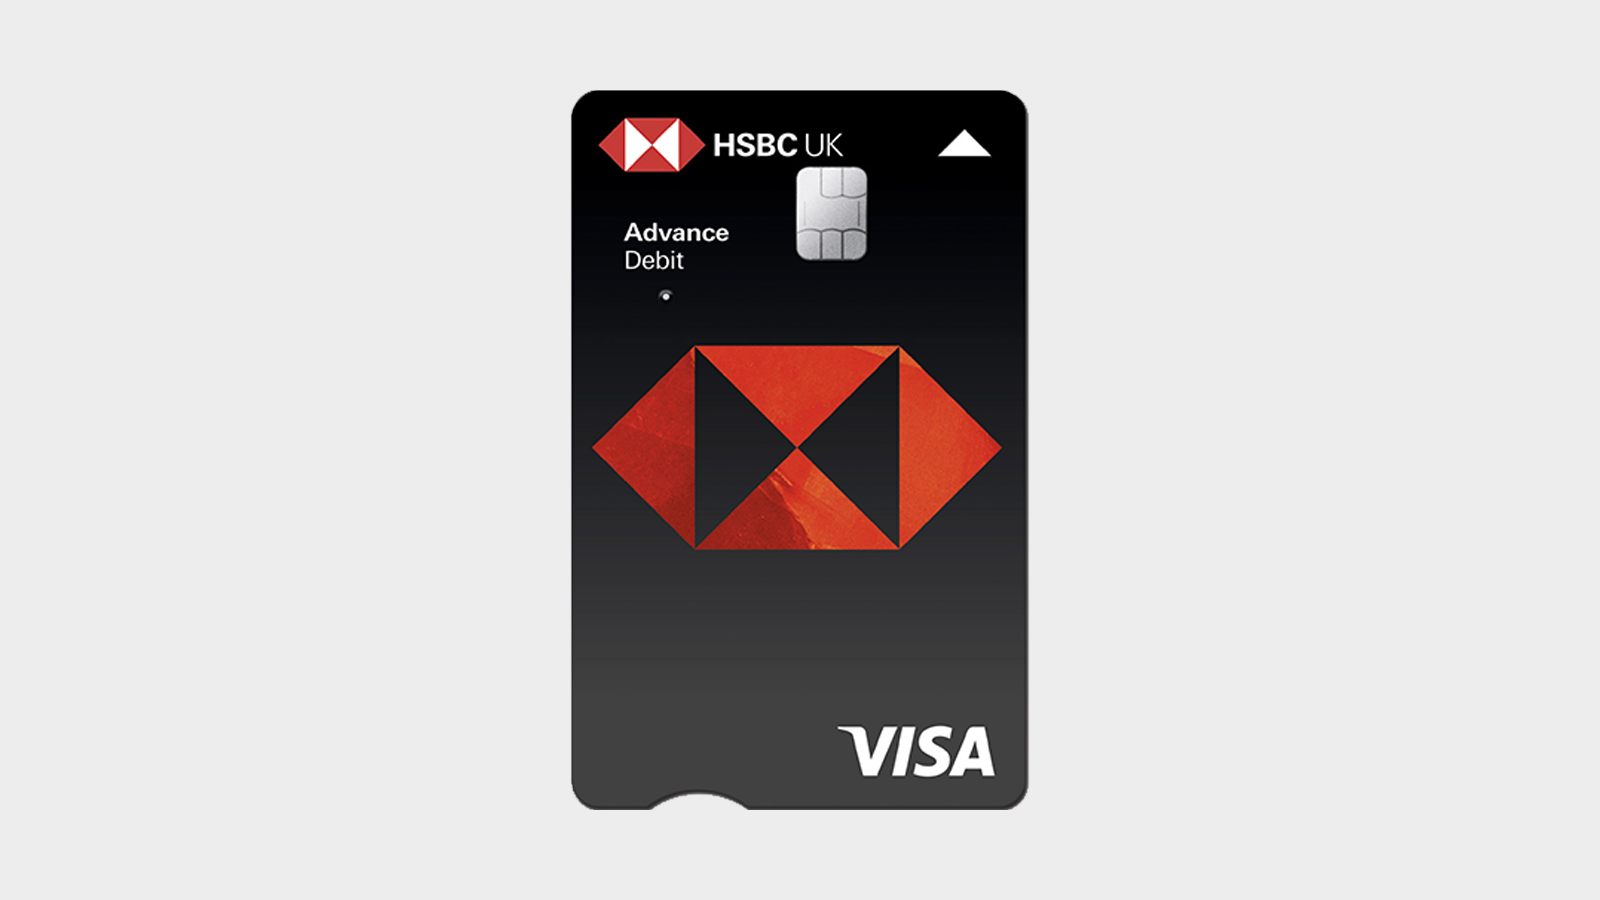 HSBC UK Advance Debit card image